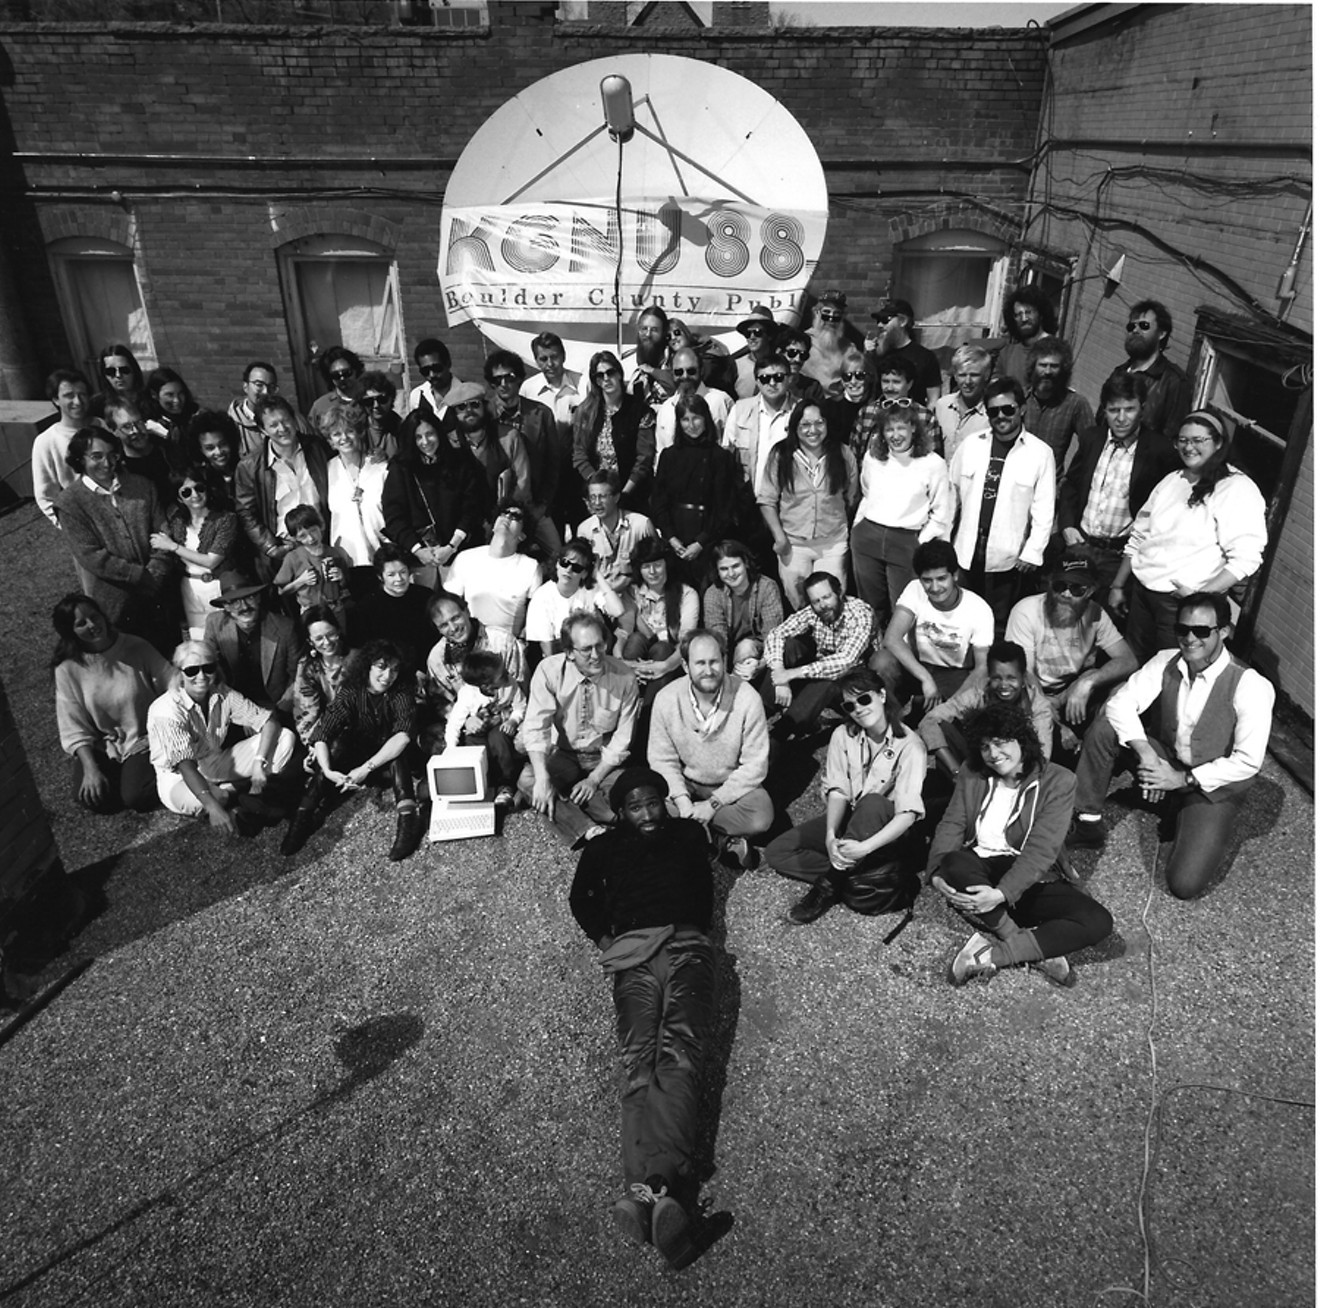 Community radio station KGNU is celebrating its fortieth birthday.